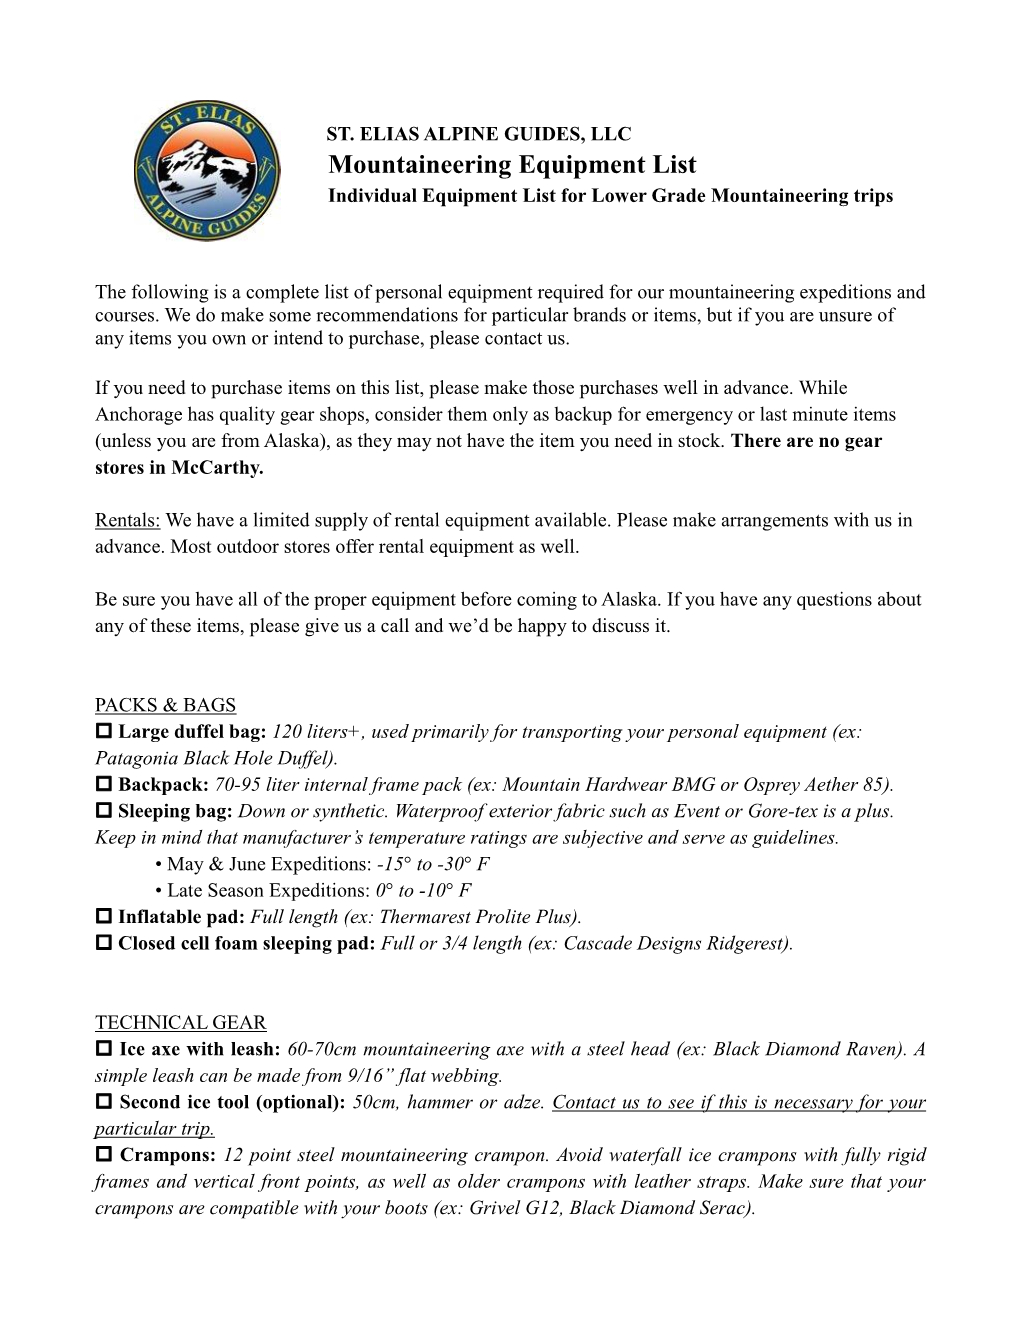 Mountaineering Equipment List Individual Equipment List for Lower Grade Mountaineering Trips